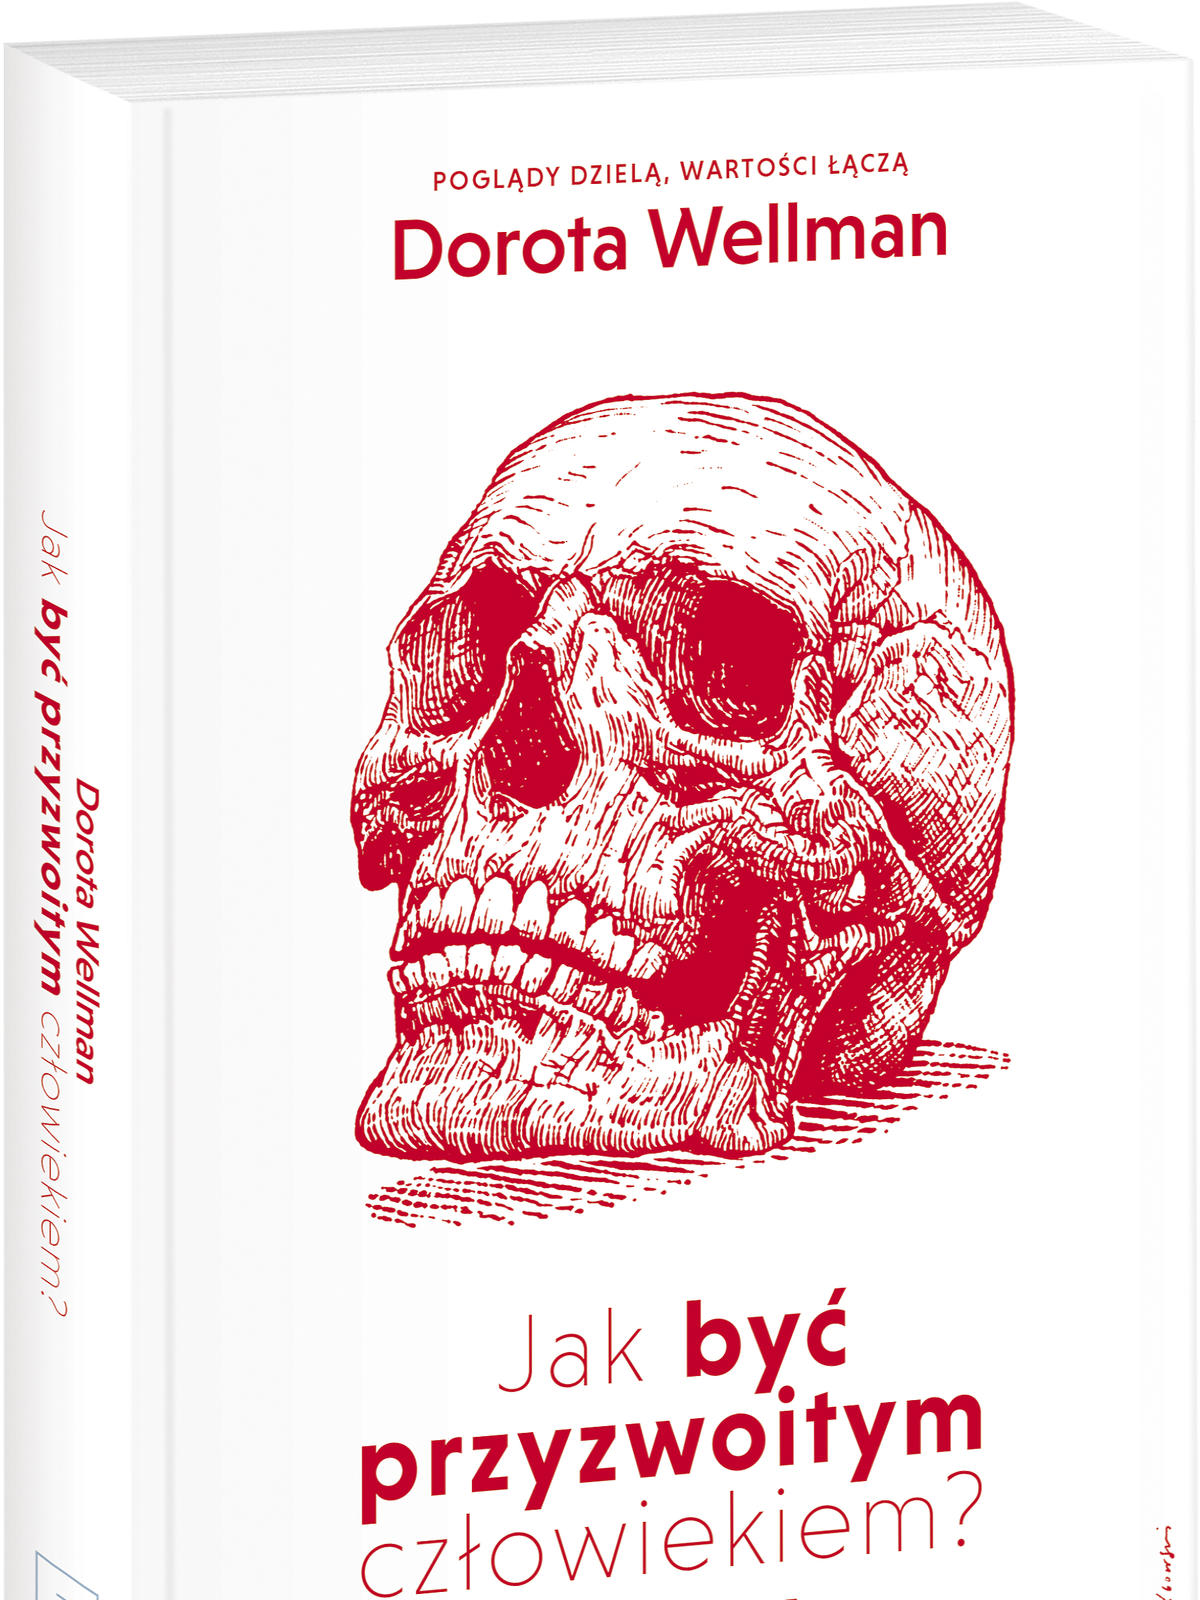 Dorota Wellman, 